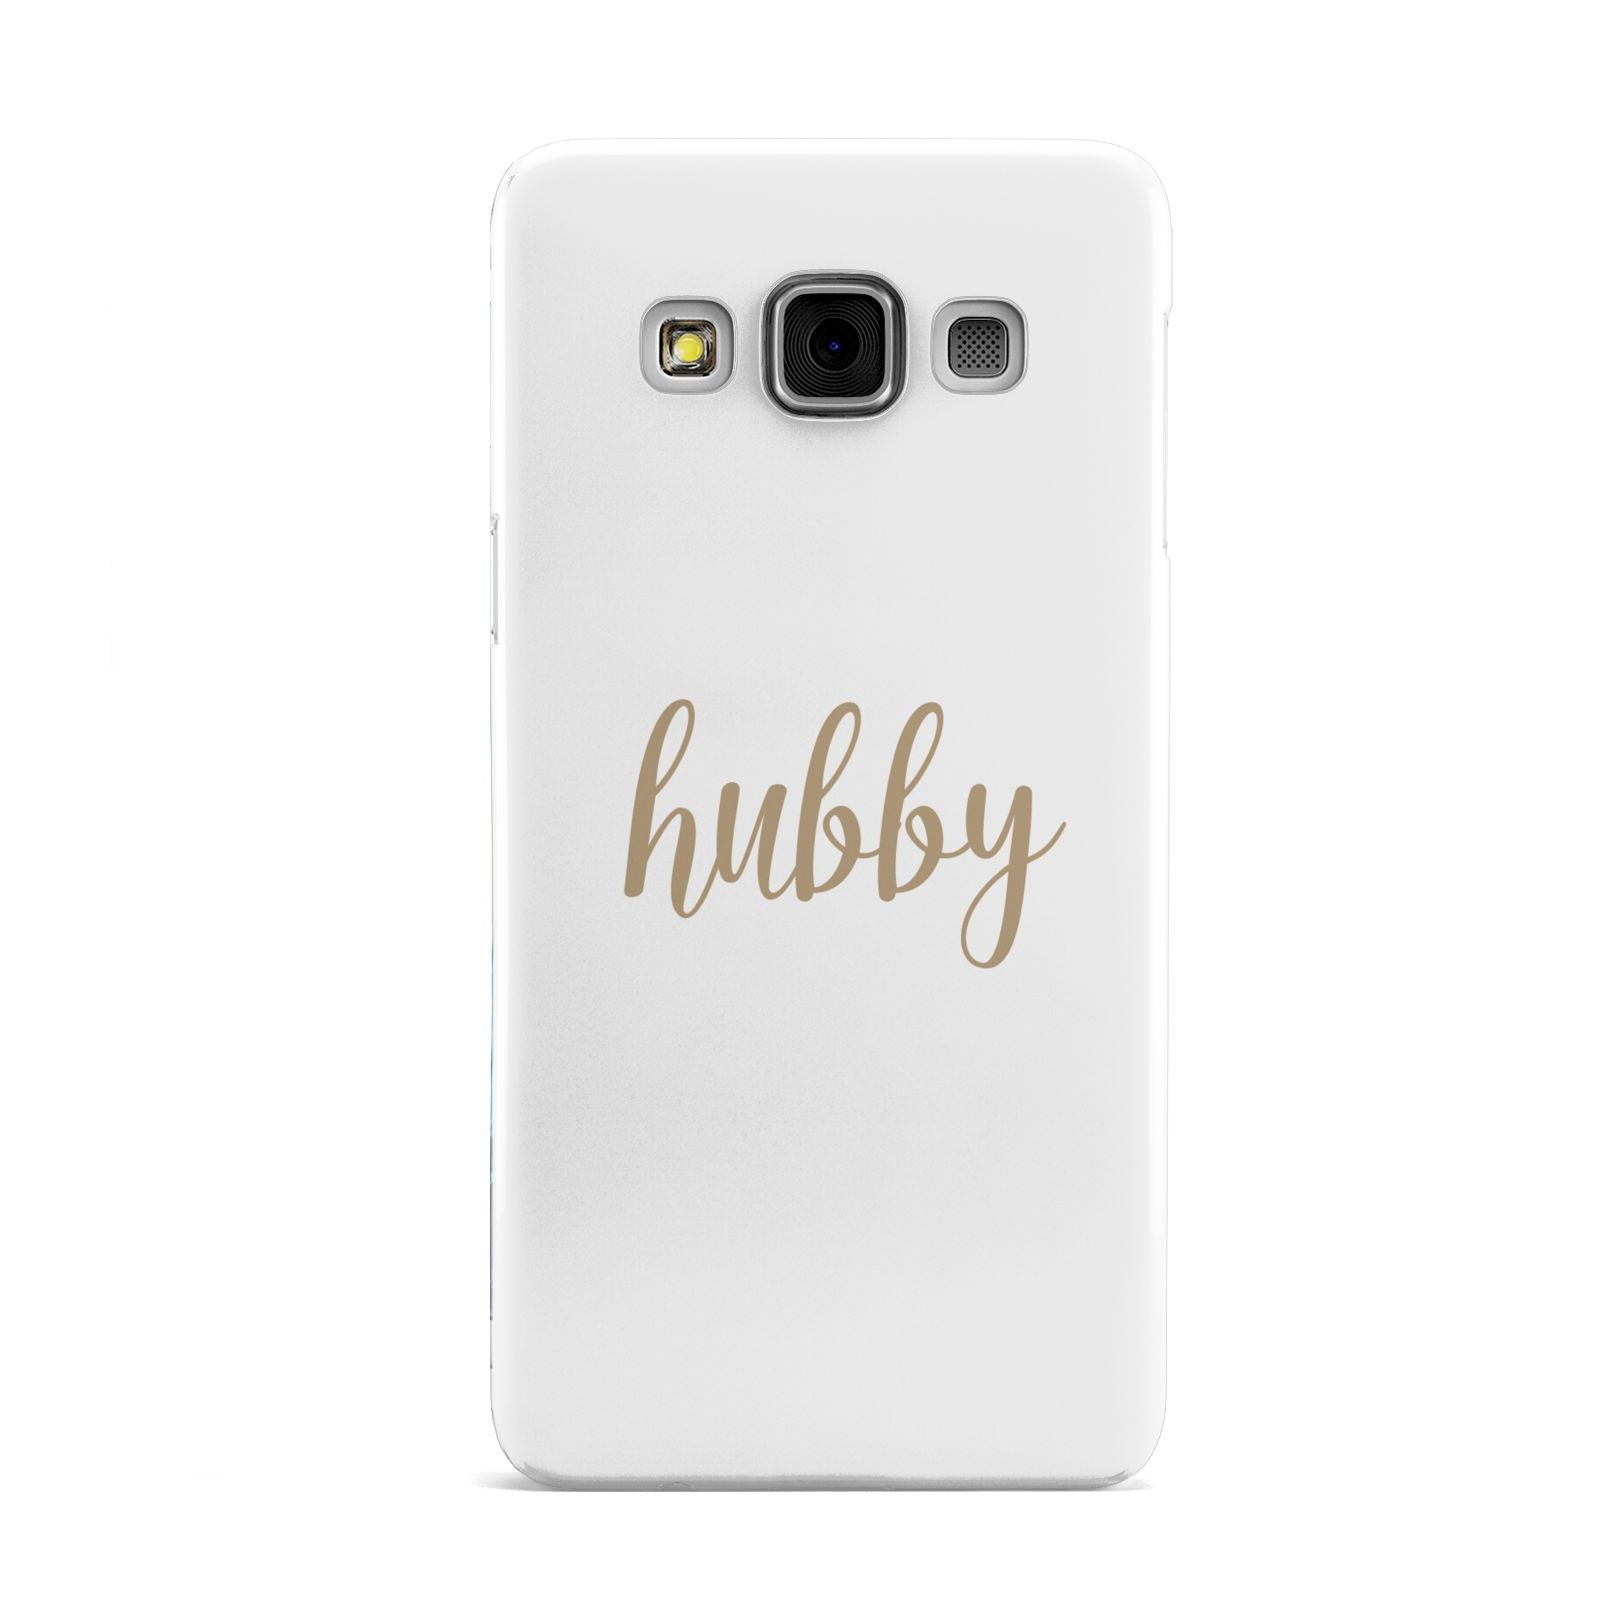 Hubby Samsung Galaxy A3 Case